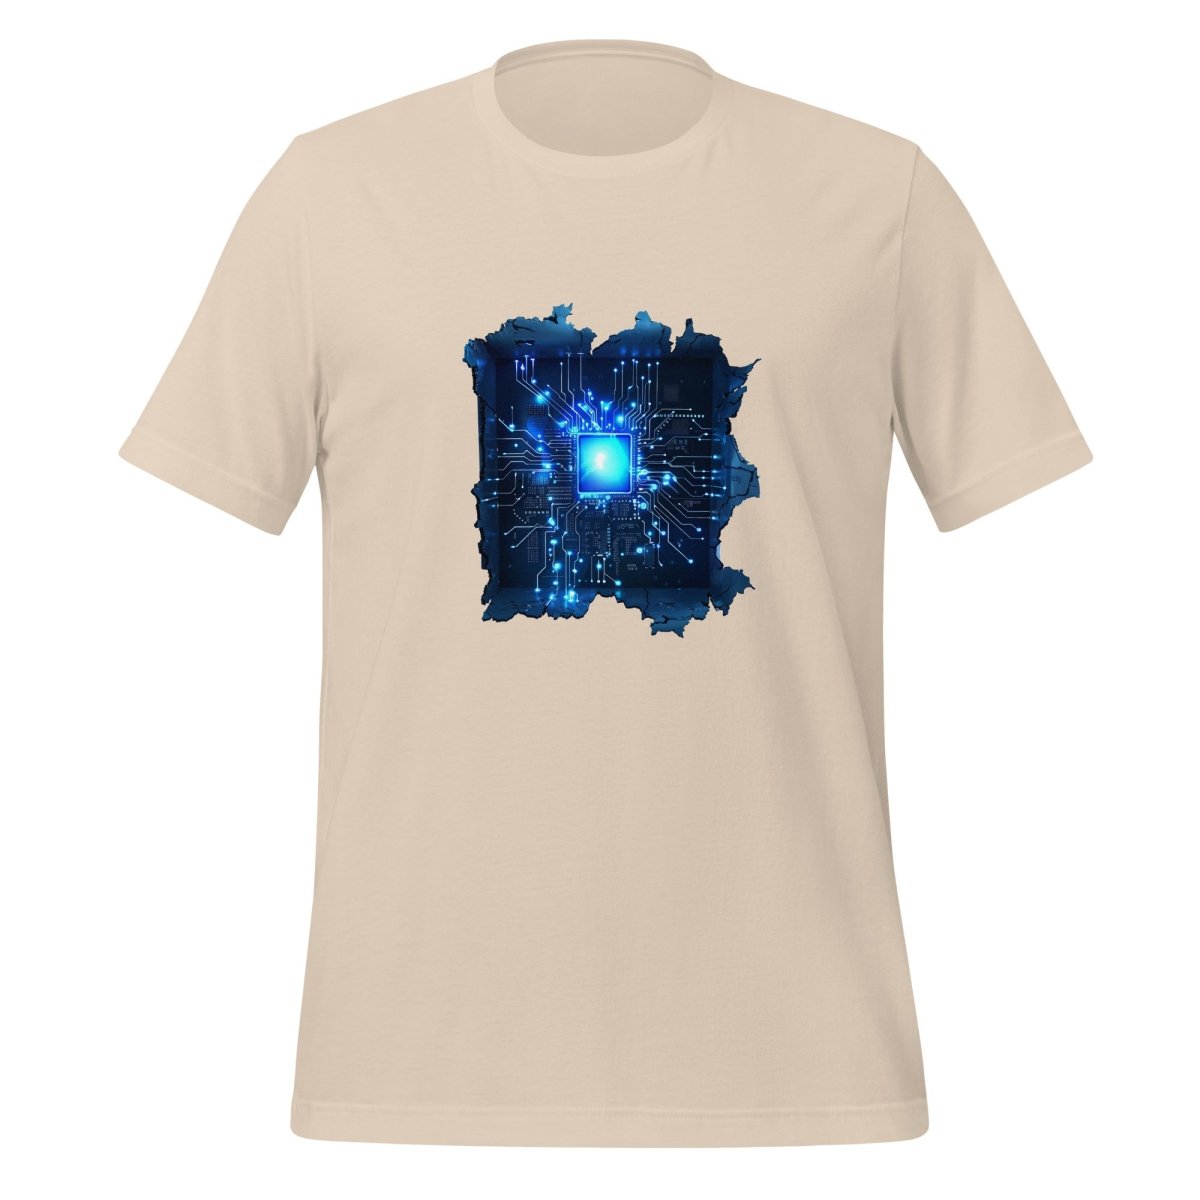 CPU Heart T - Shirt (unisex) - Soft Cream - AI Store